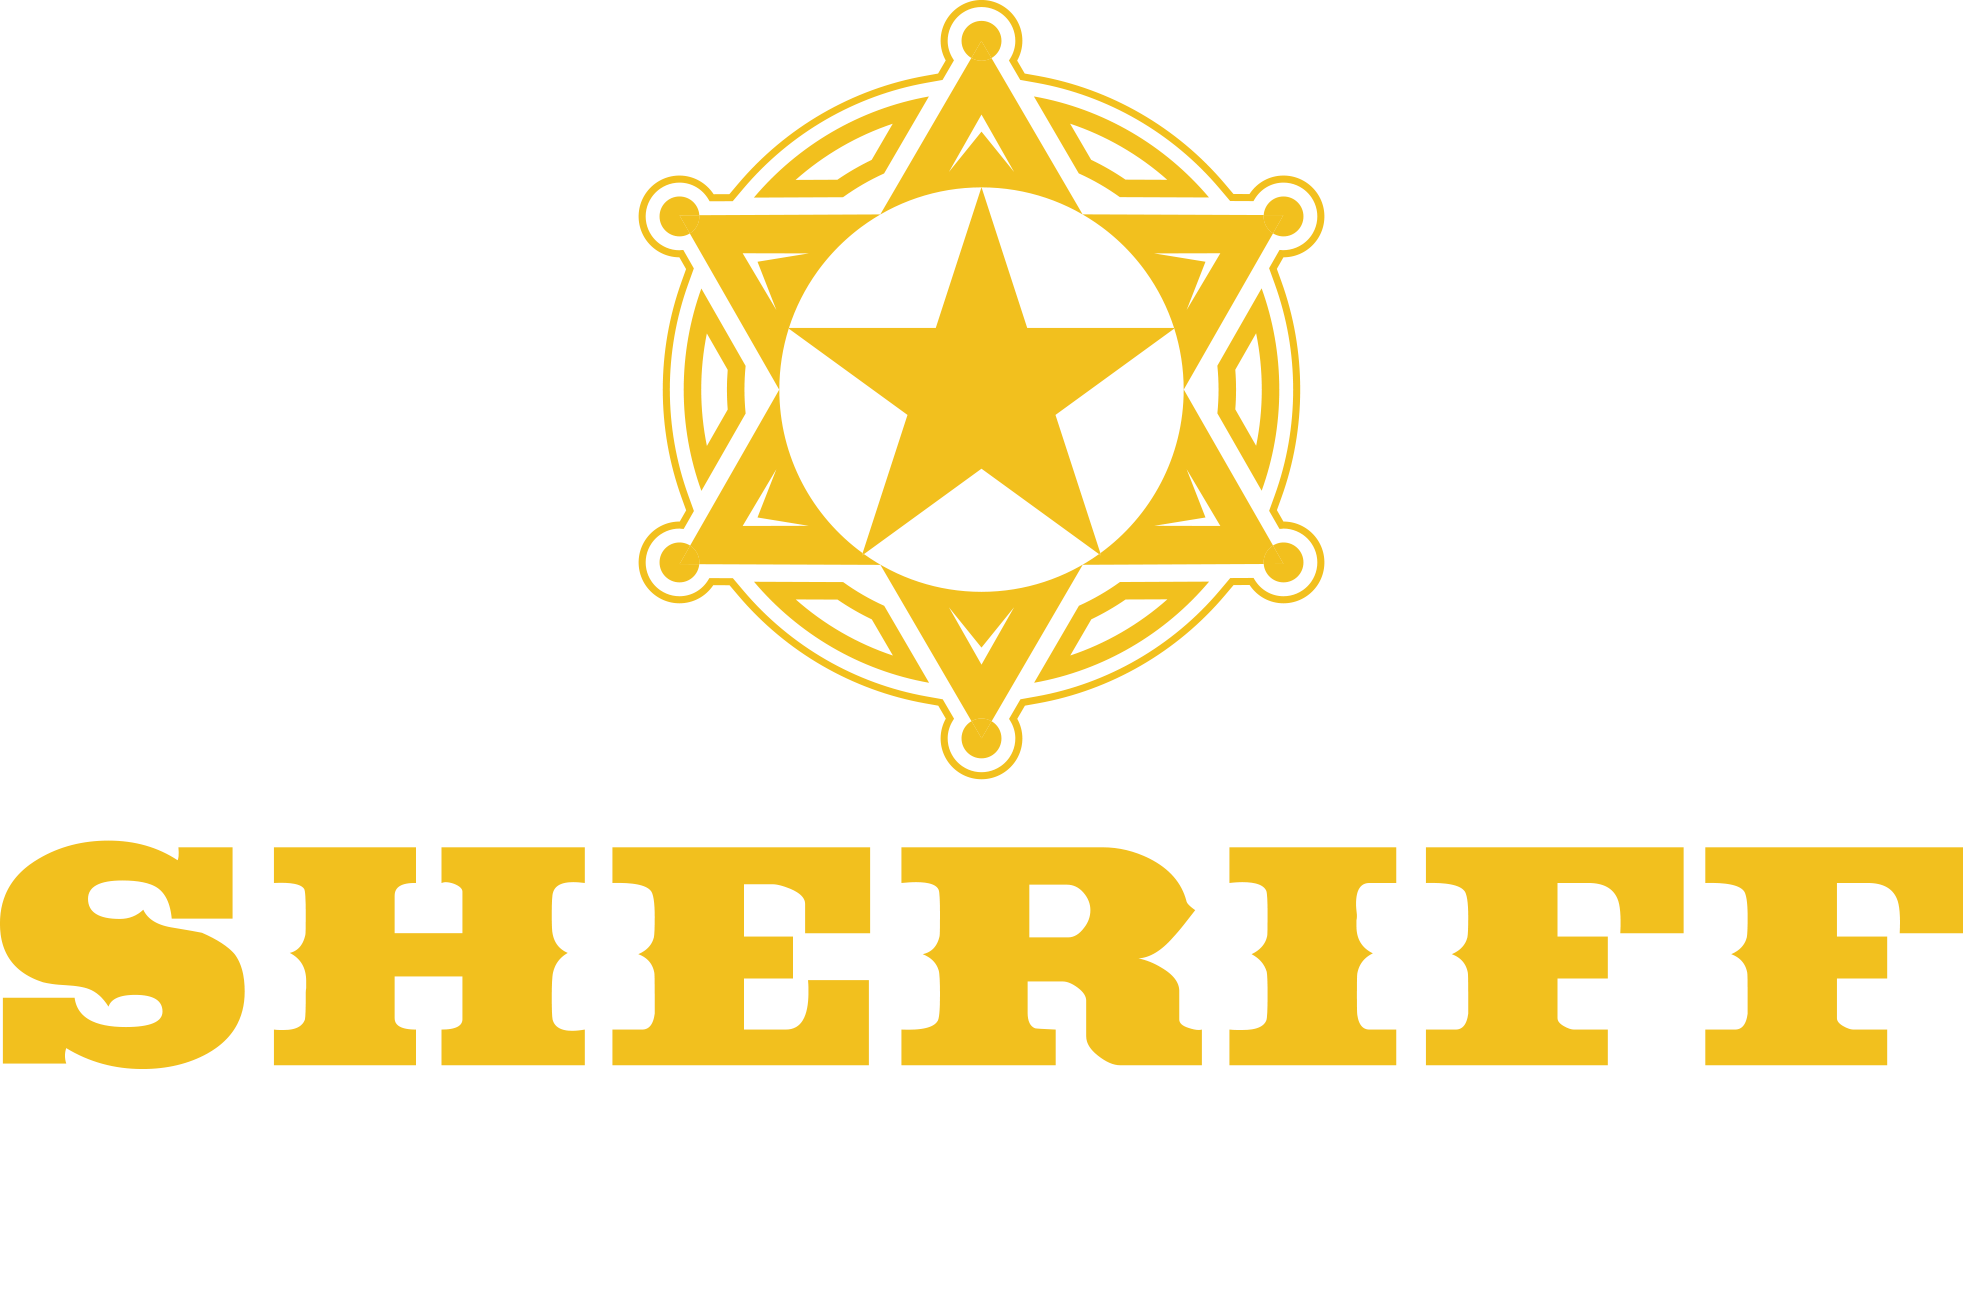 Sheriff pub